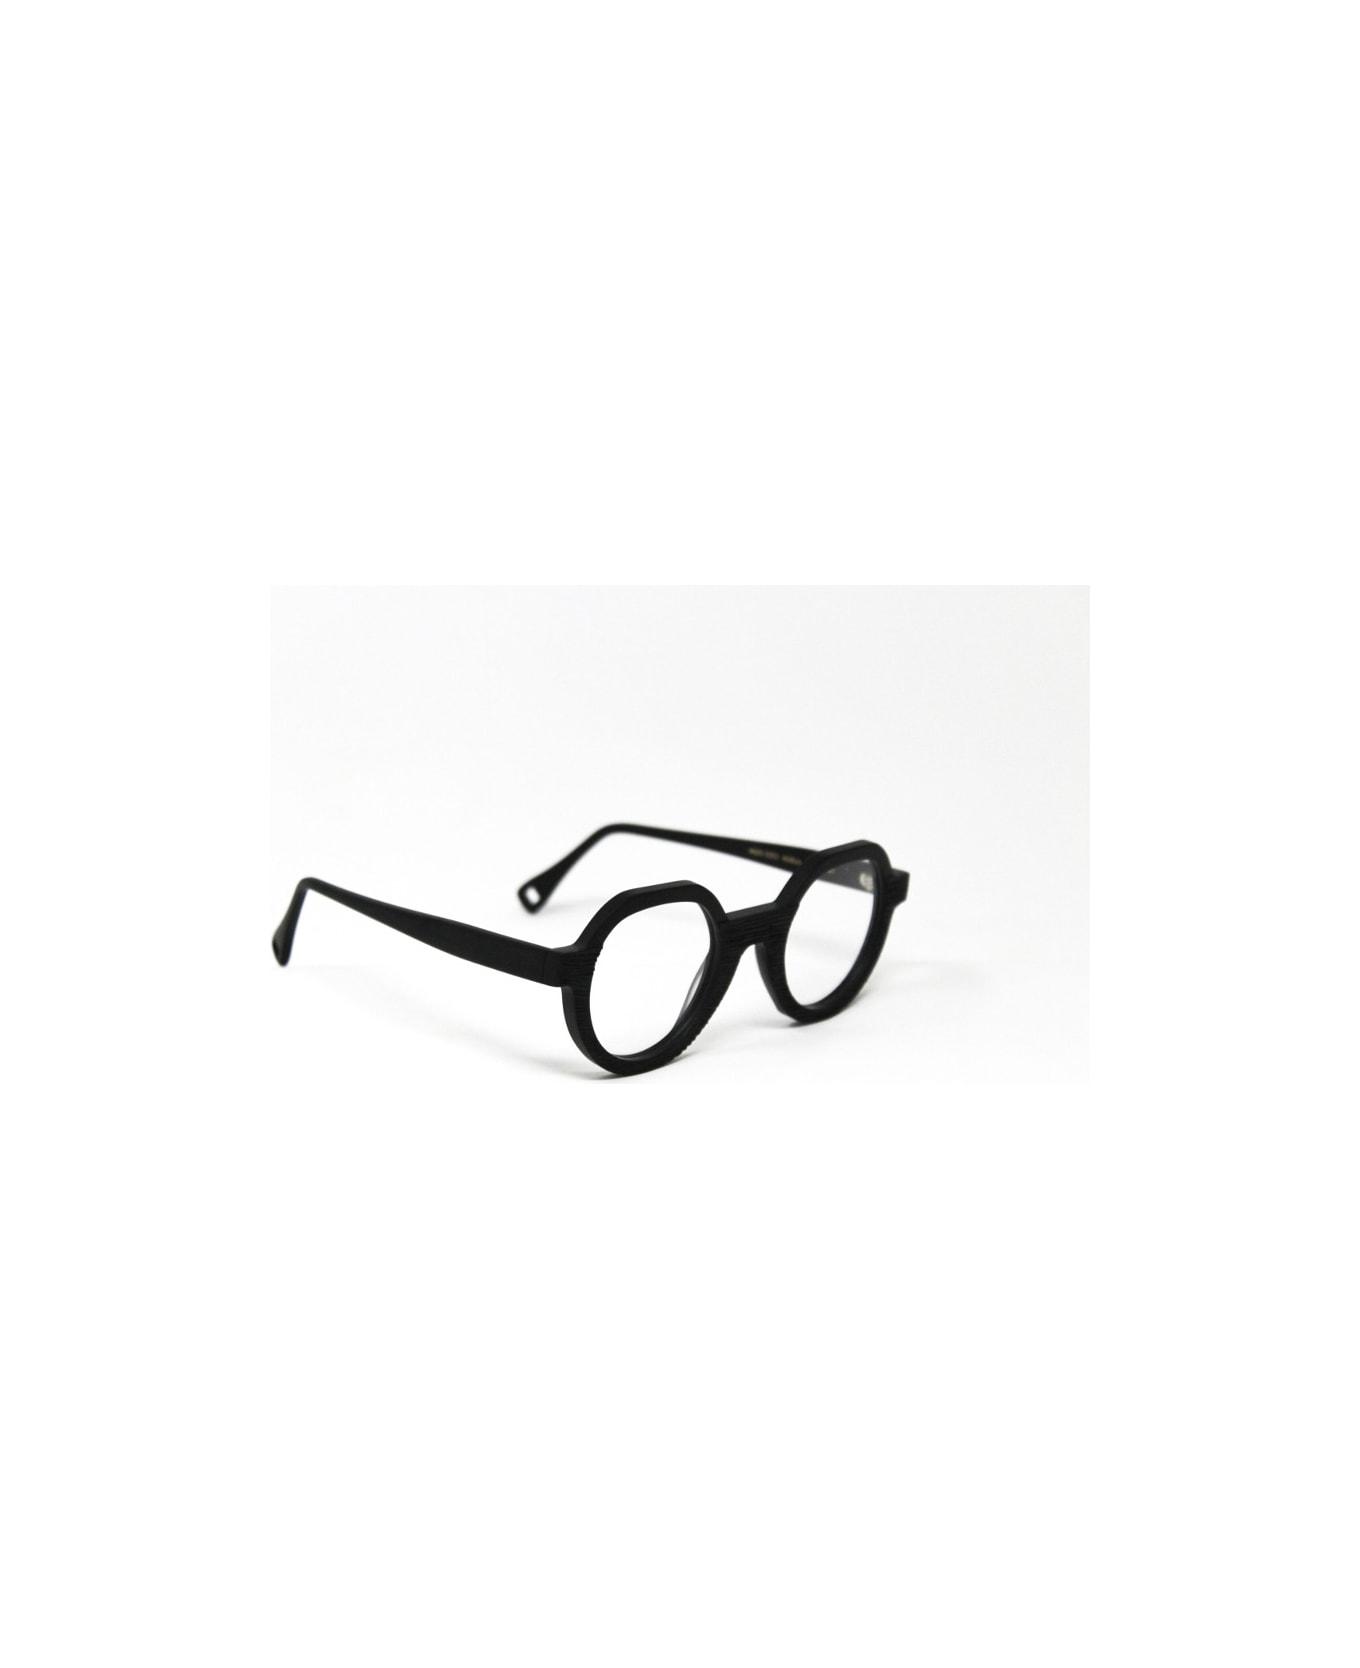 Liò Occhiali LVP302 C01 Glasses - Nero